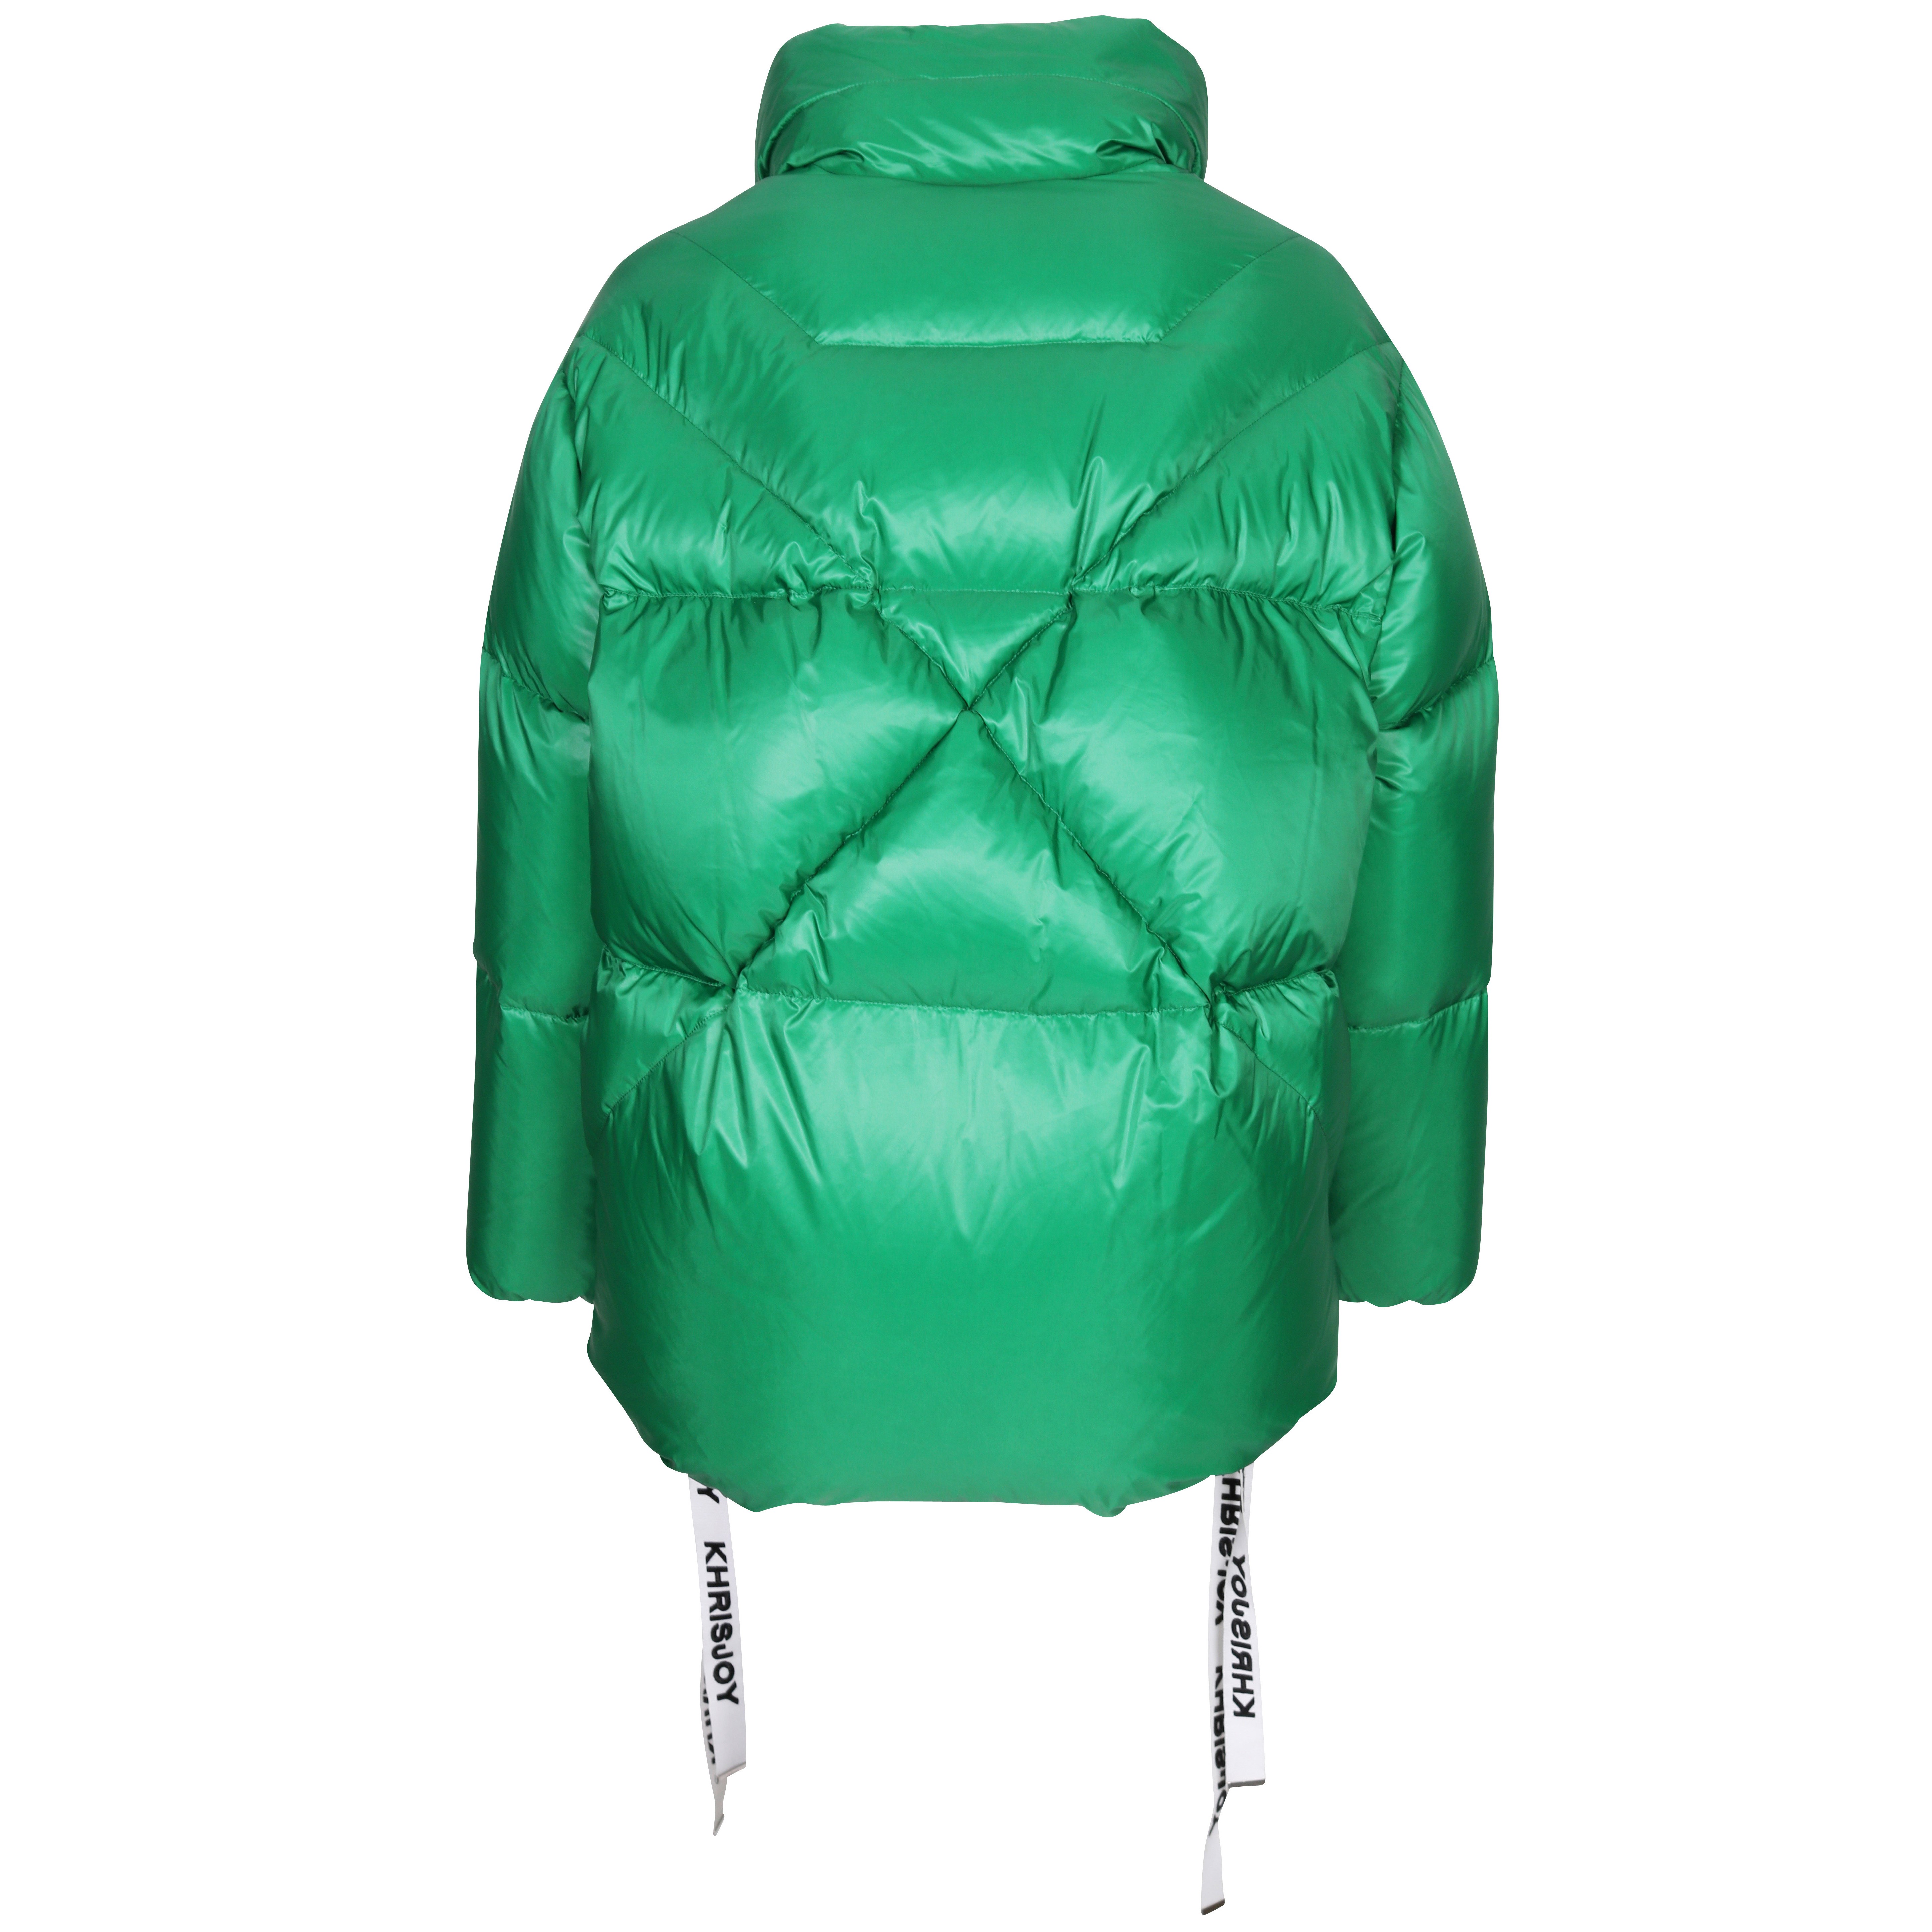 Khrisjoy Iconic Puffer Oversized Jacket in Emerald Green